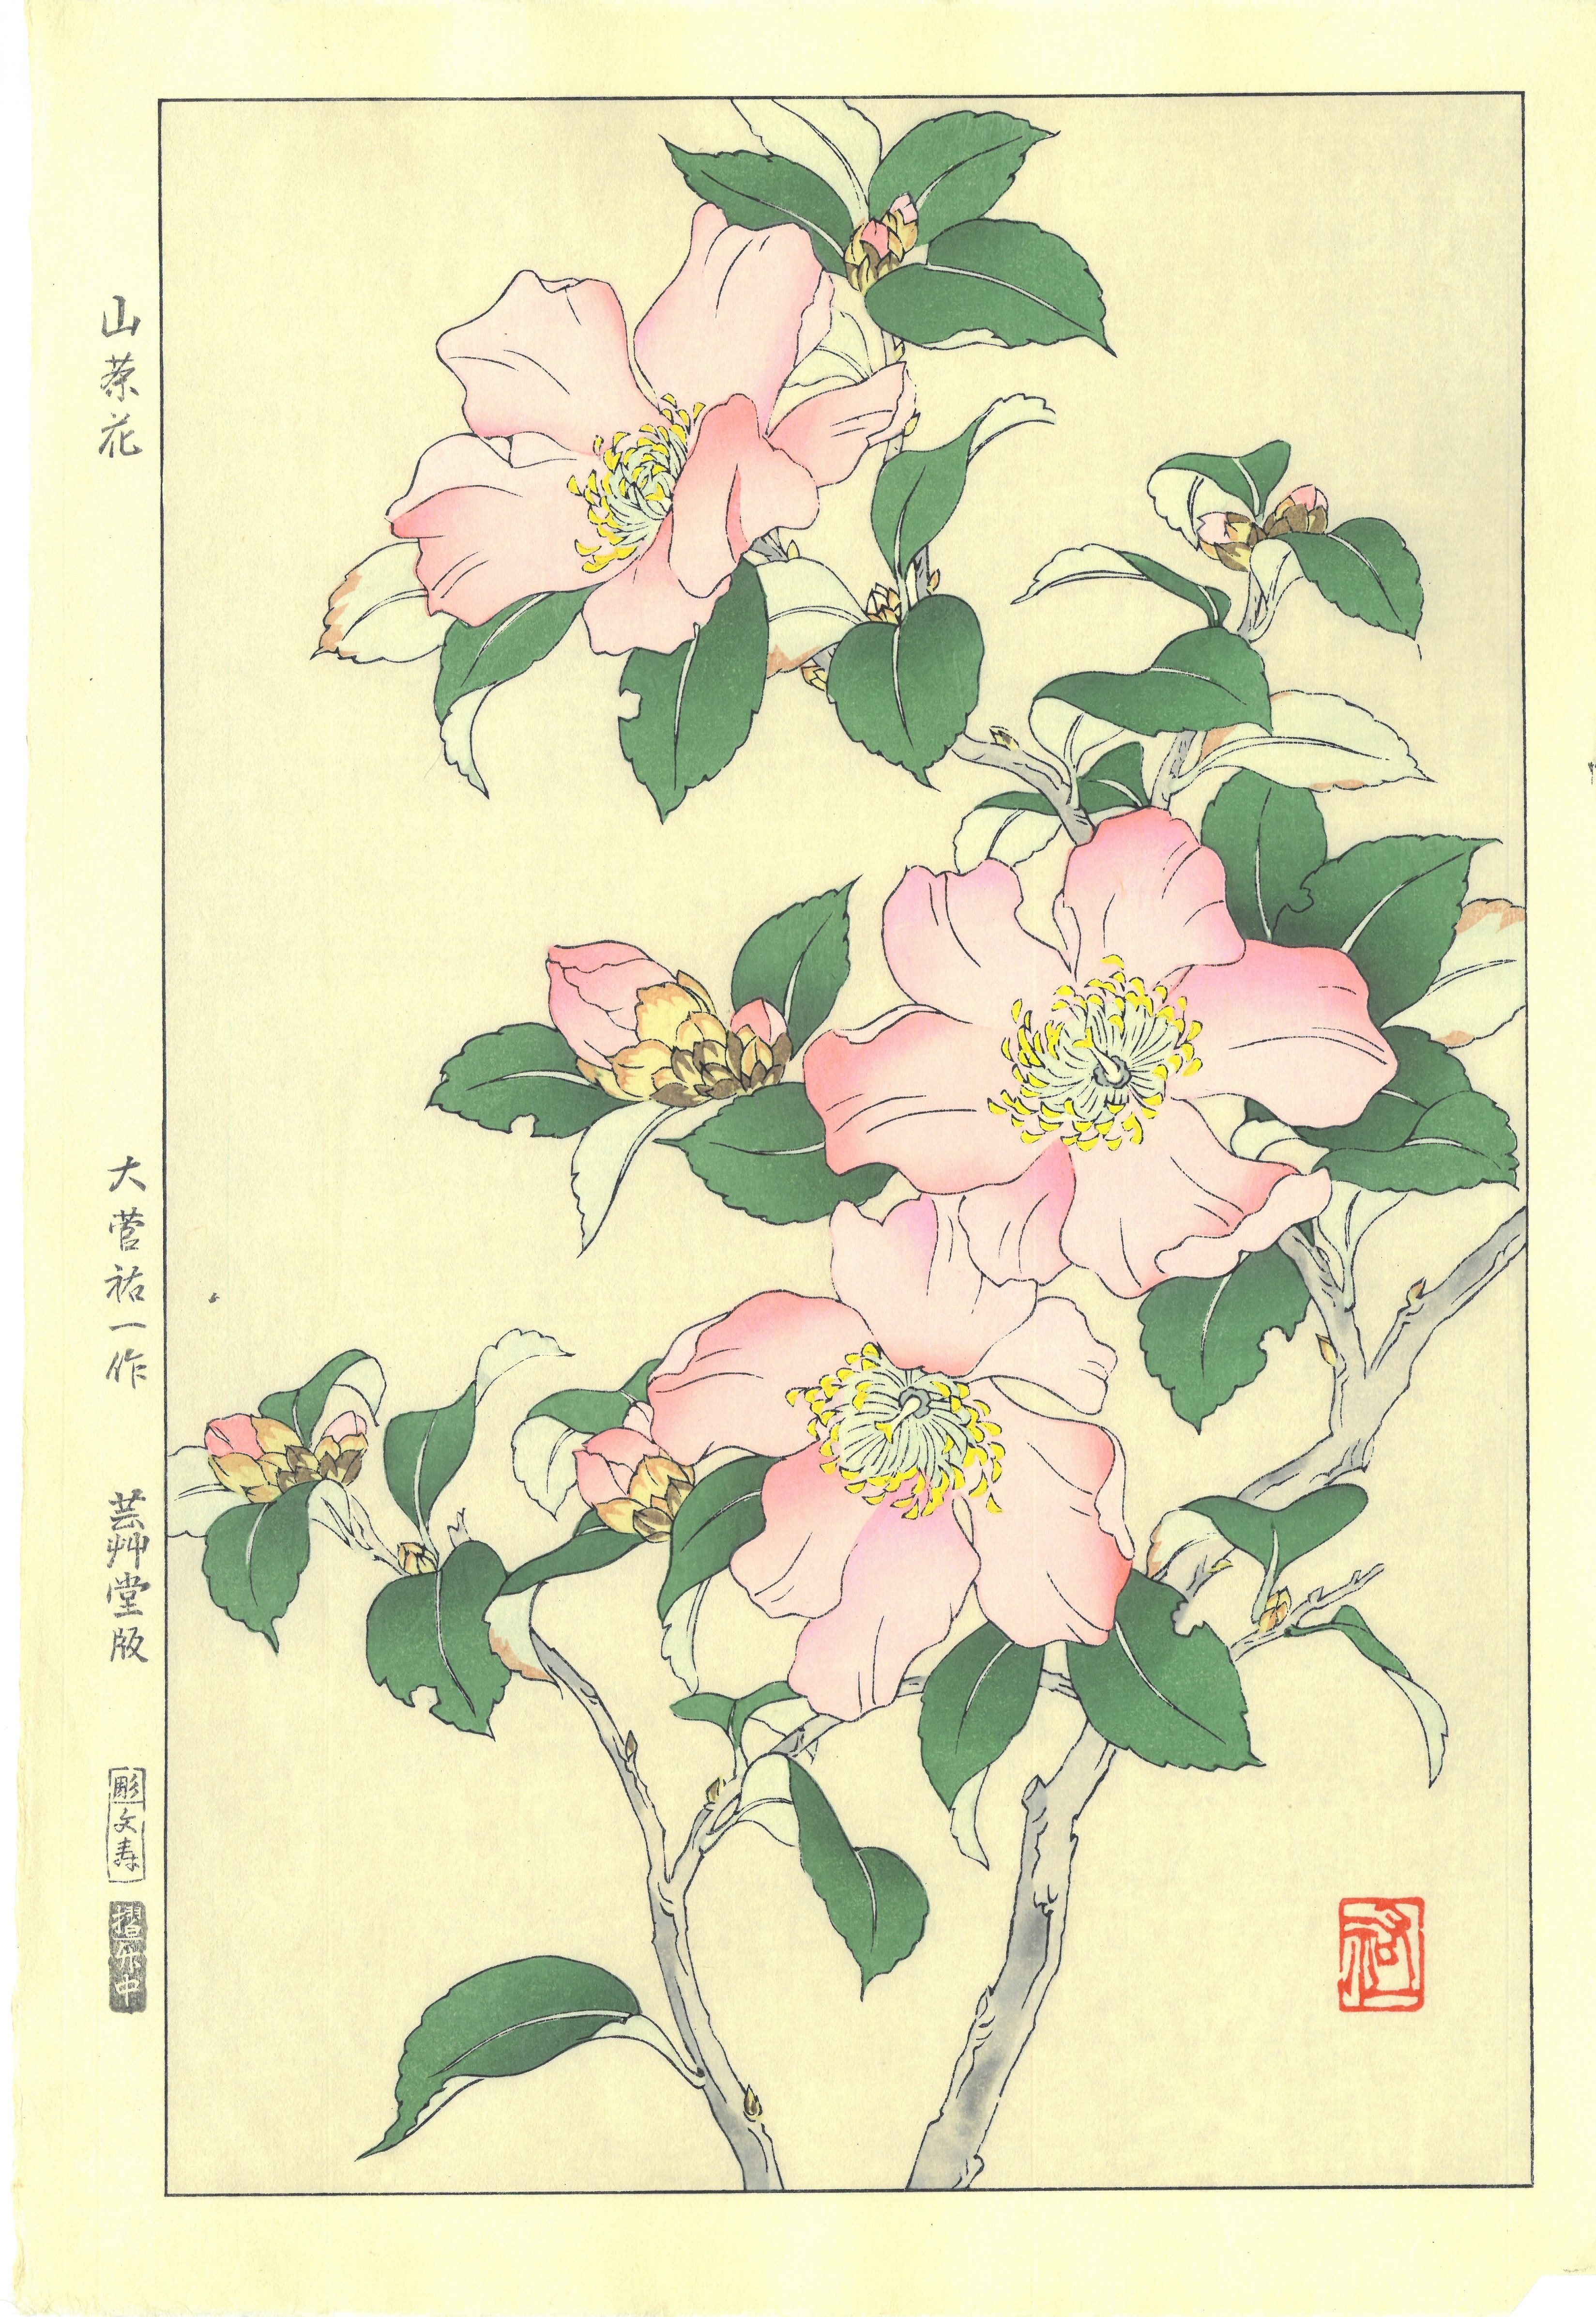 Woodblock print "Camellia" by Osuga Yuichi Published by UNSODO